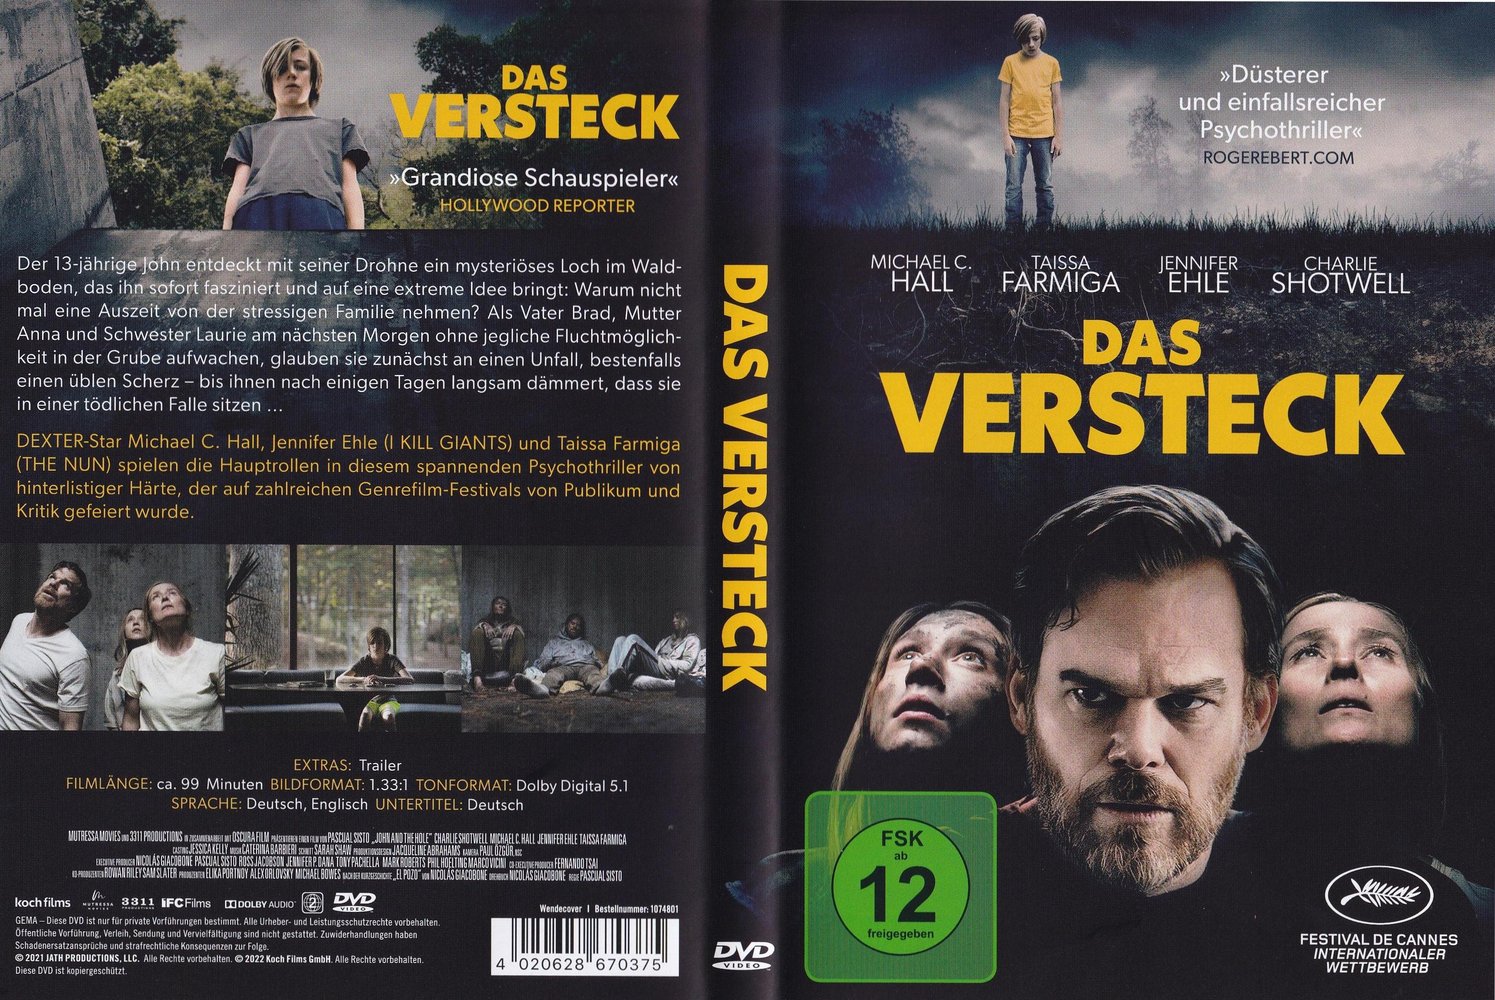 https://gfx.videobuster.de/archive/v/cCx65HjaRG50IGV8hSj4R5gcz0lMkawsiUyRjA4JTJGaW1hmSUyRmpwZWclMkbJ8tpjtN5huWJm22PSyWPhw2OmZS5qcGcmcj1opjAw/das-versteck-dvd-full-cover.jpg